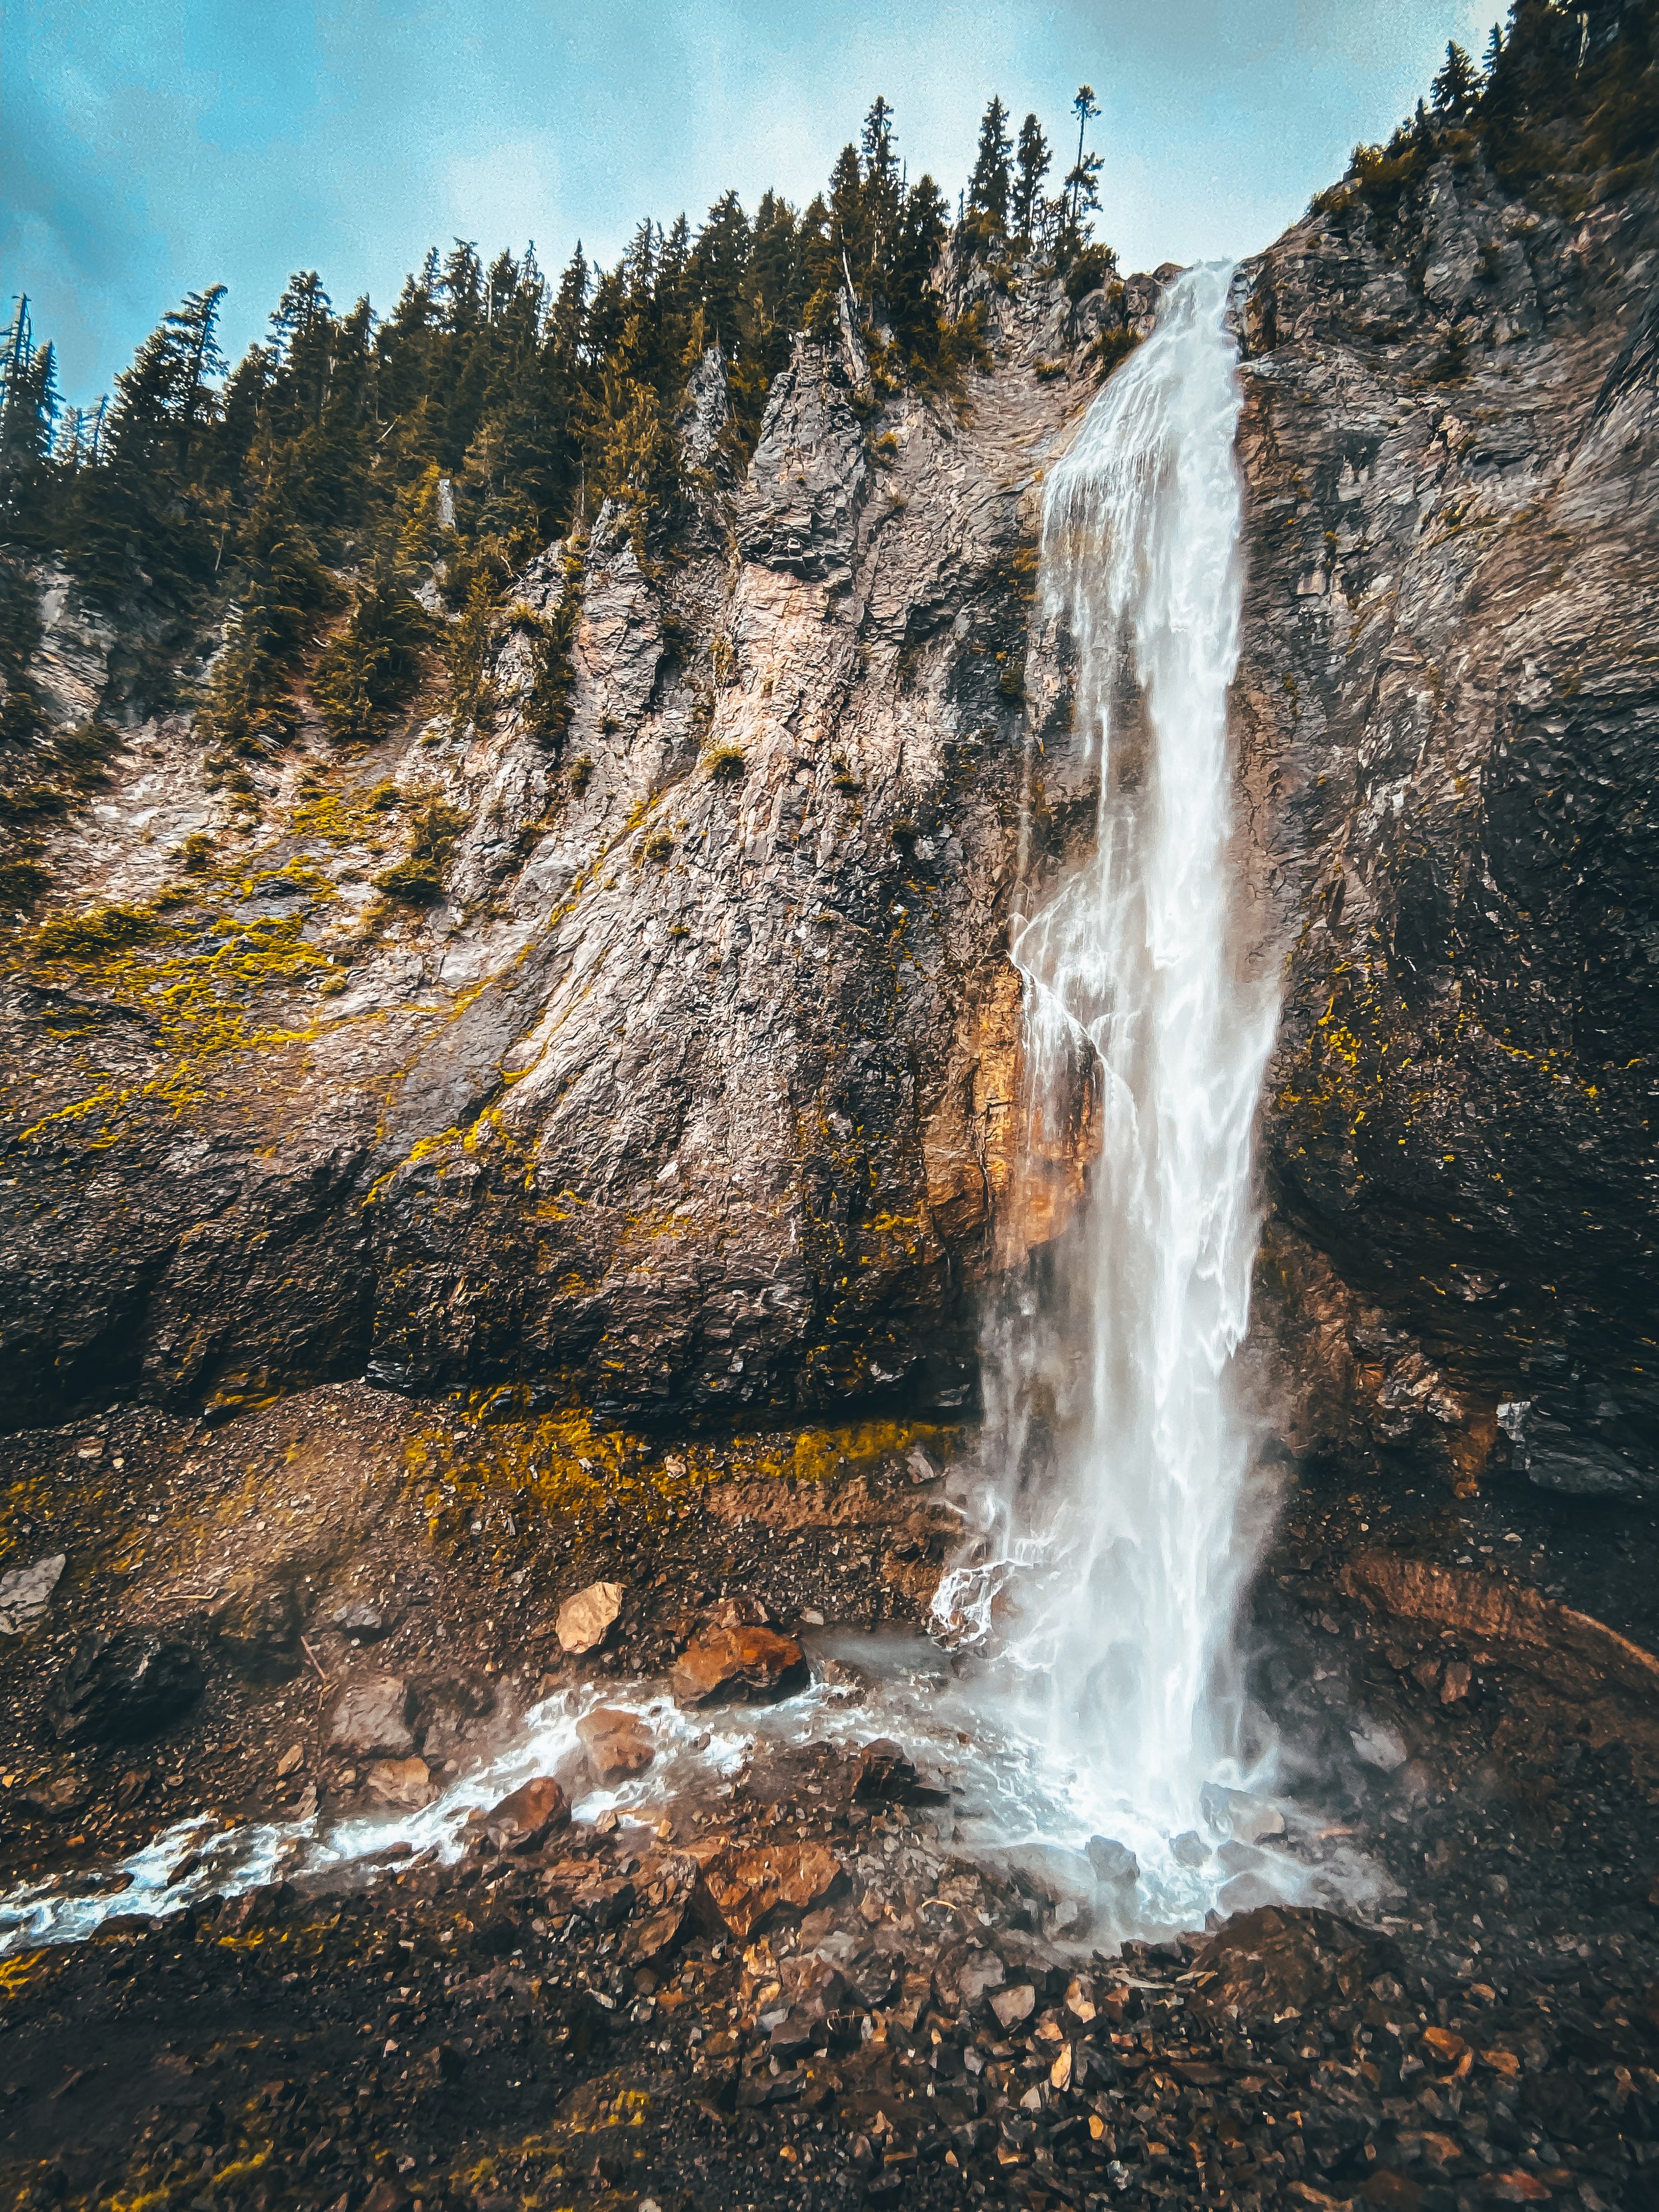 Comet Falls, Washington State – The Hiking Website